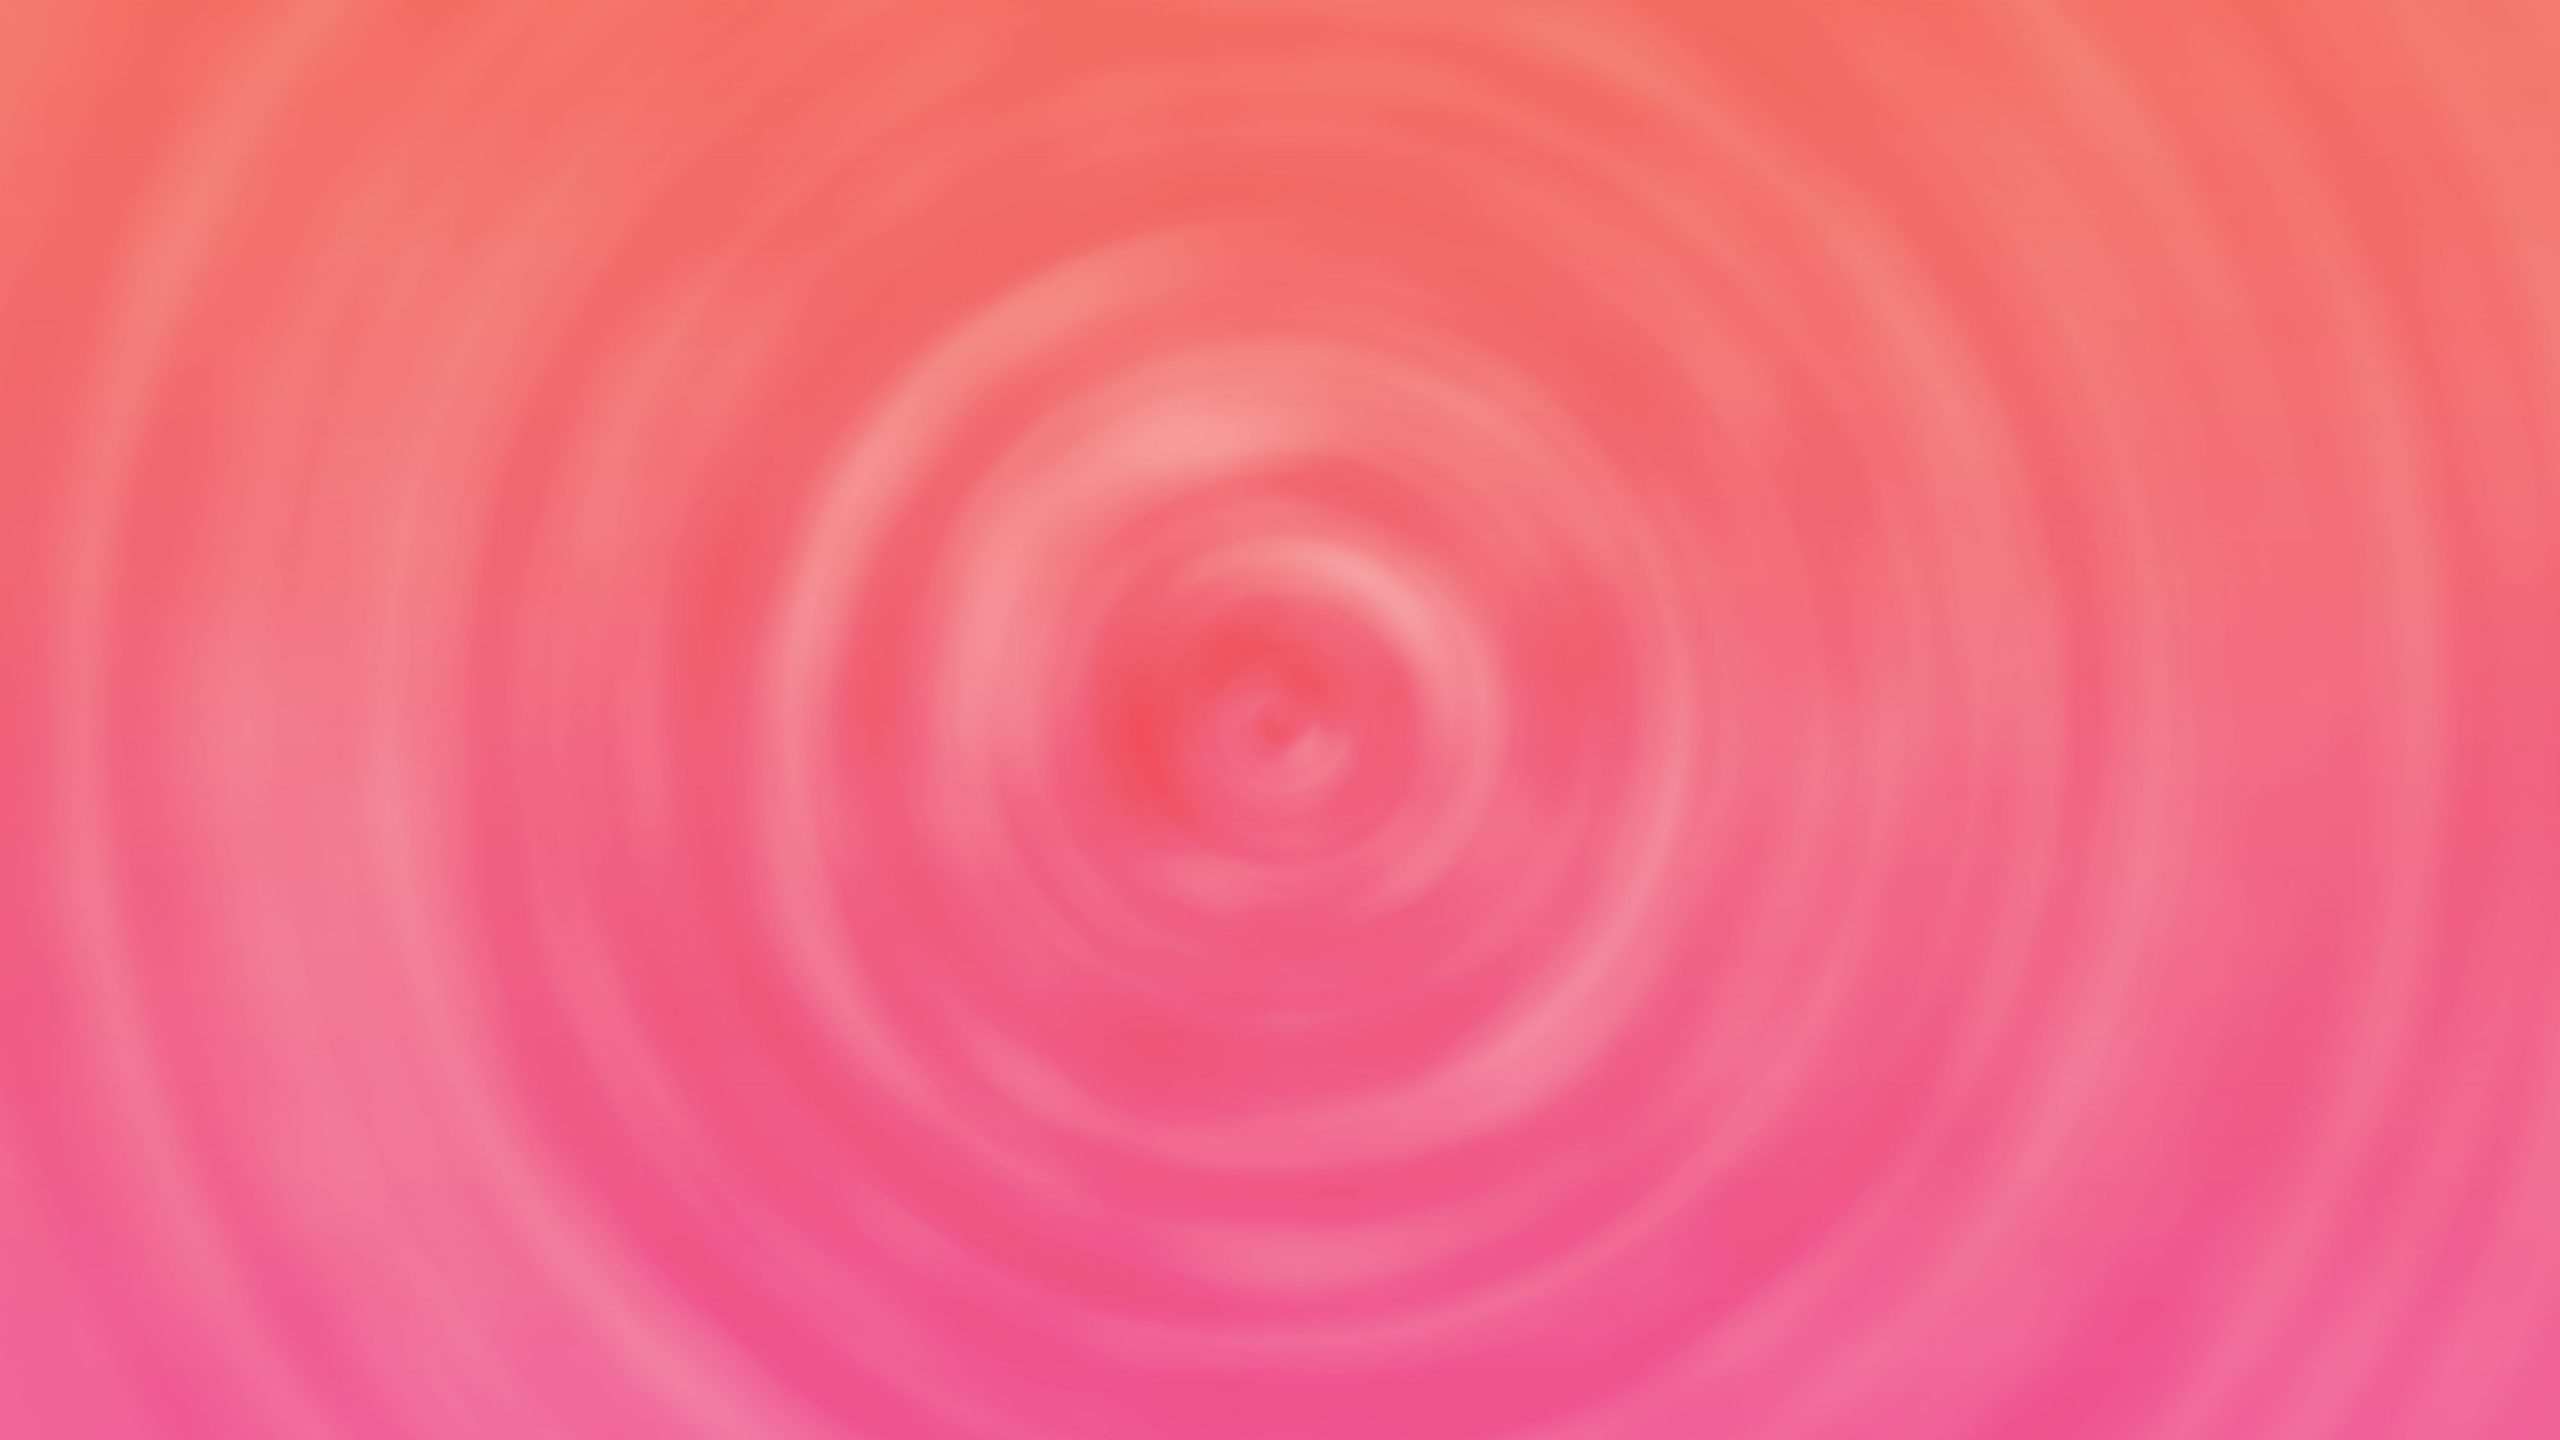 Pink spiral abstract wallpaper